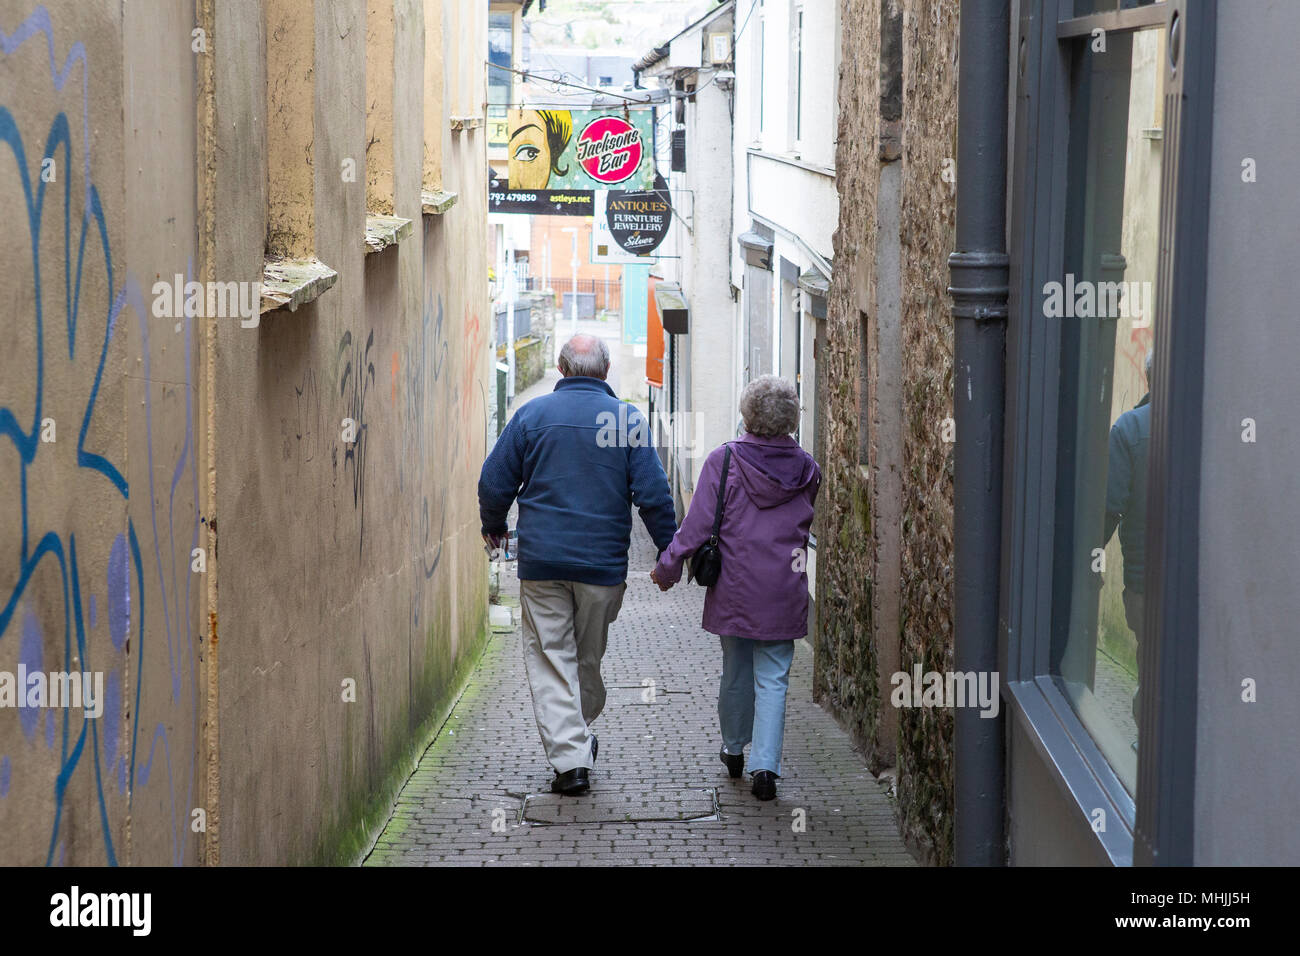 Elderly /senior couple walk hand in hand through narrow street in town Stock Photo